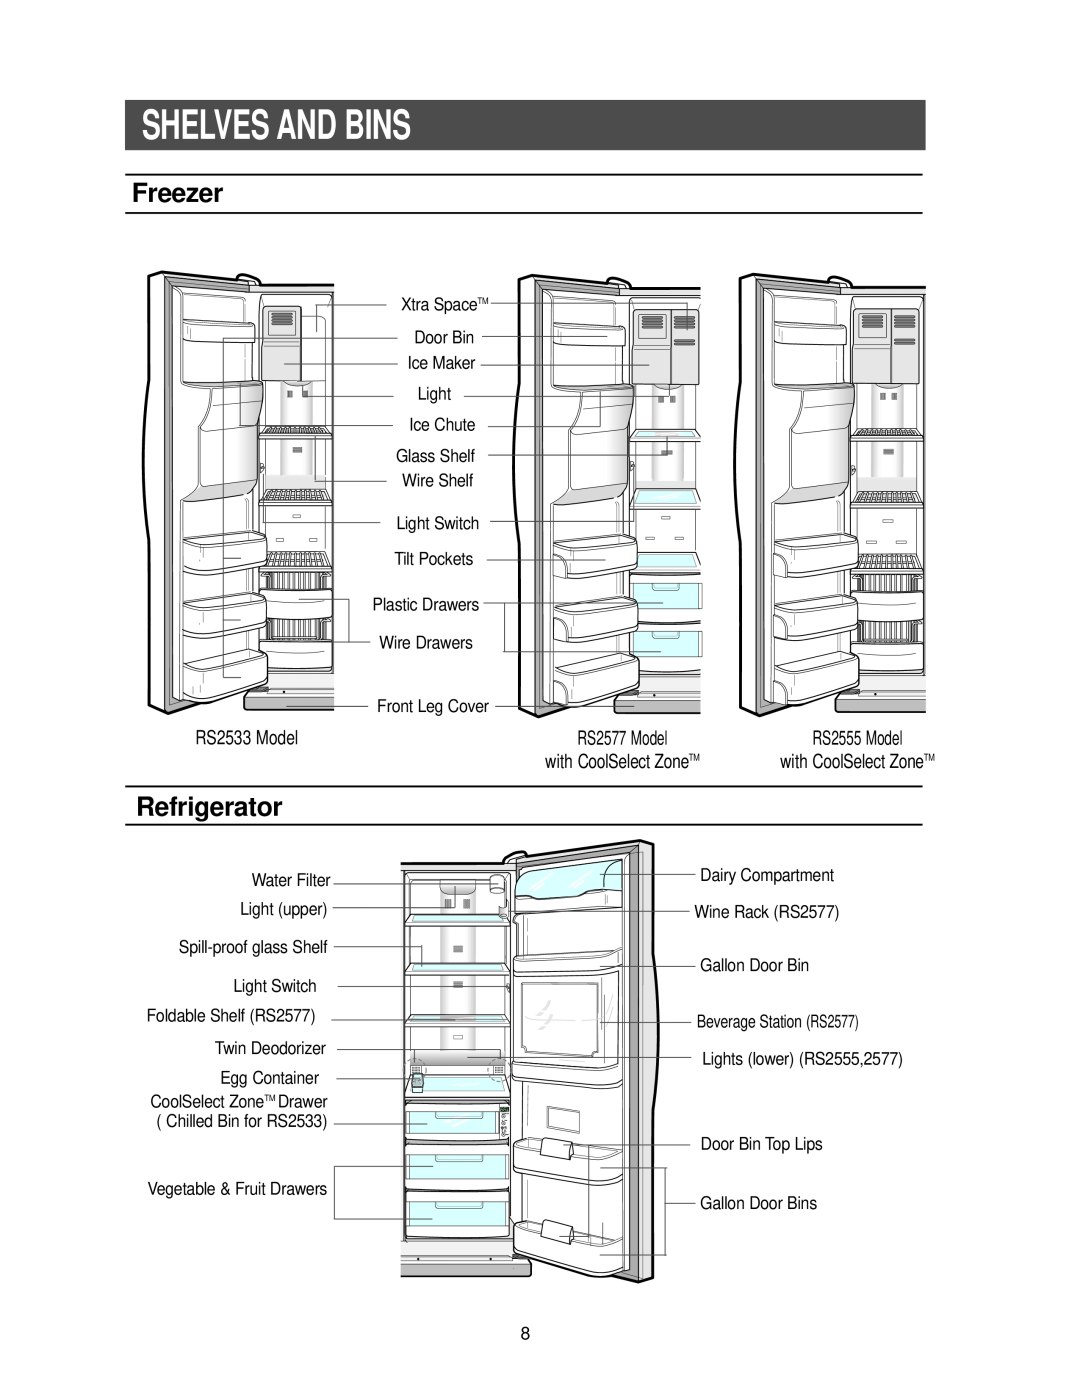 Samsung RS2533SW owner manual Shelves And Bins, Freezer, Refrigerator, RS2533 Model 